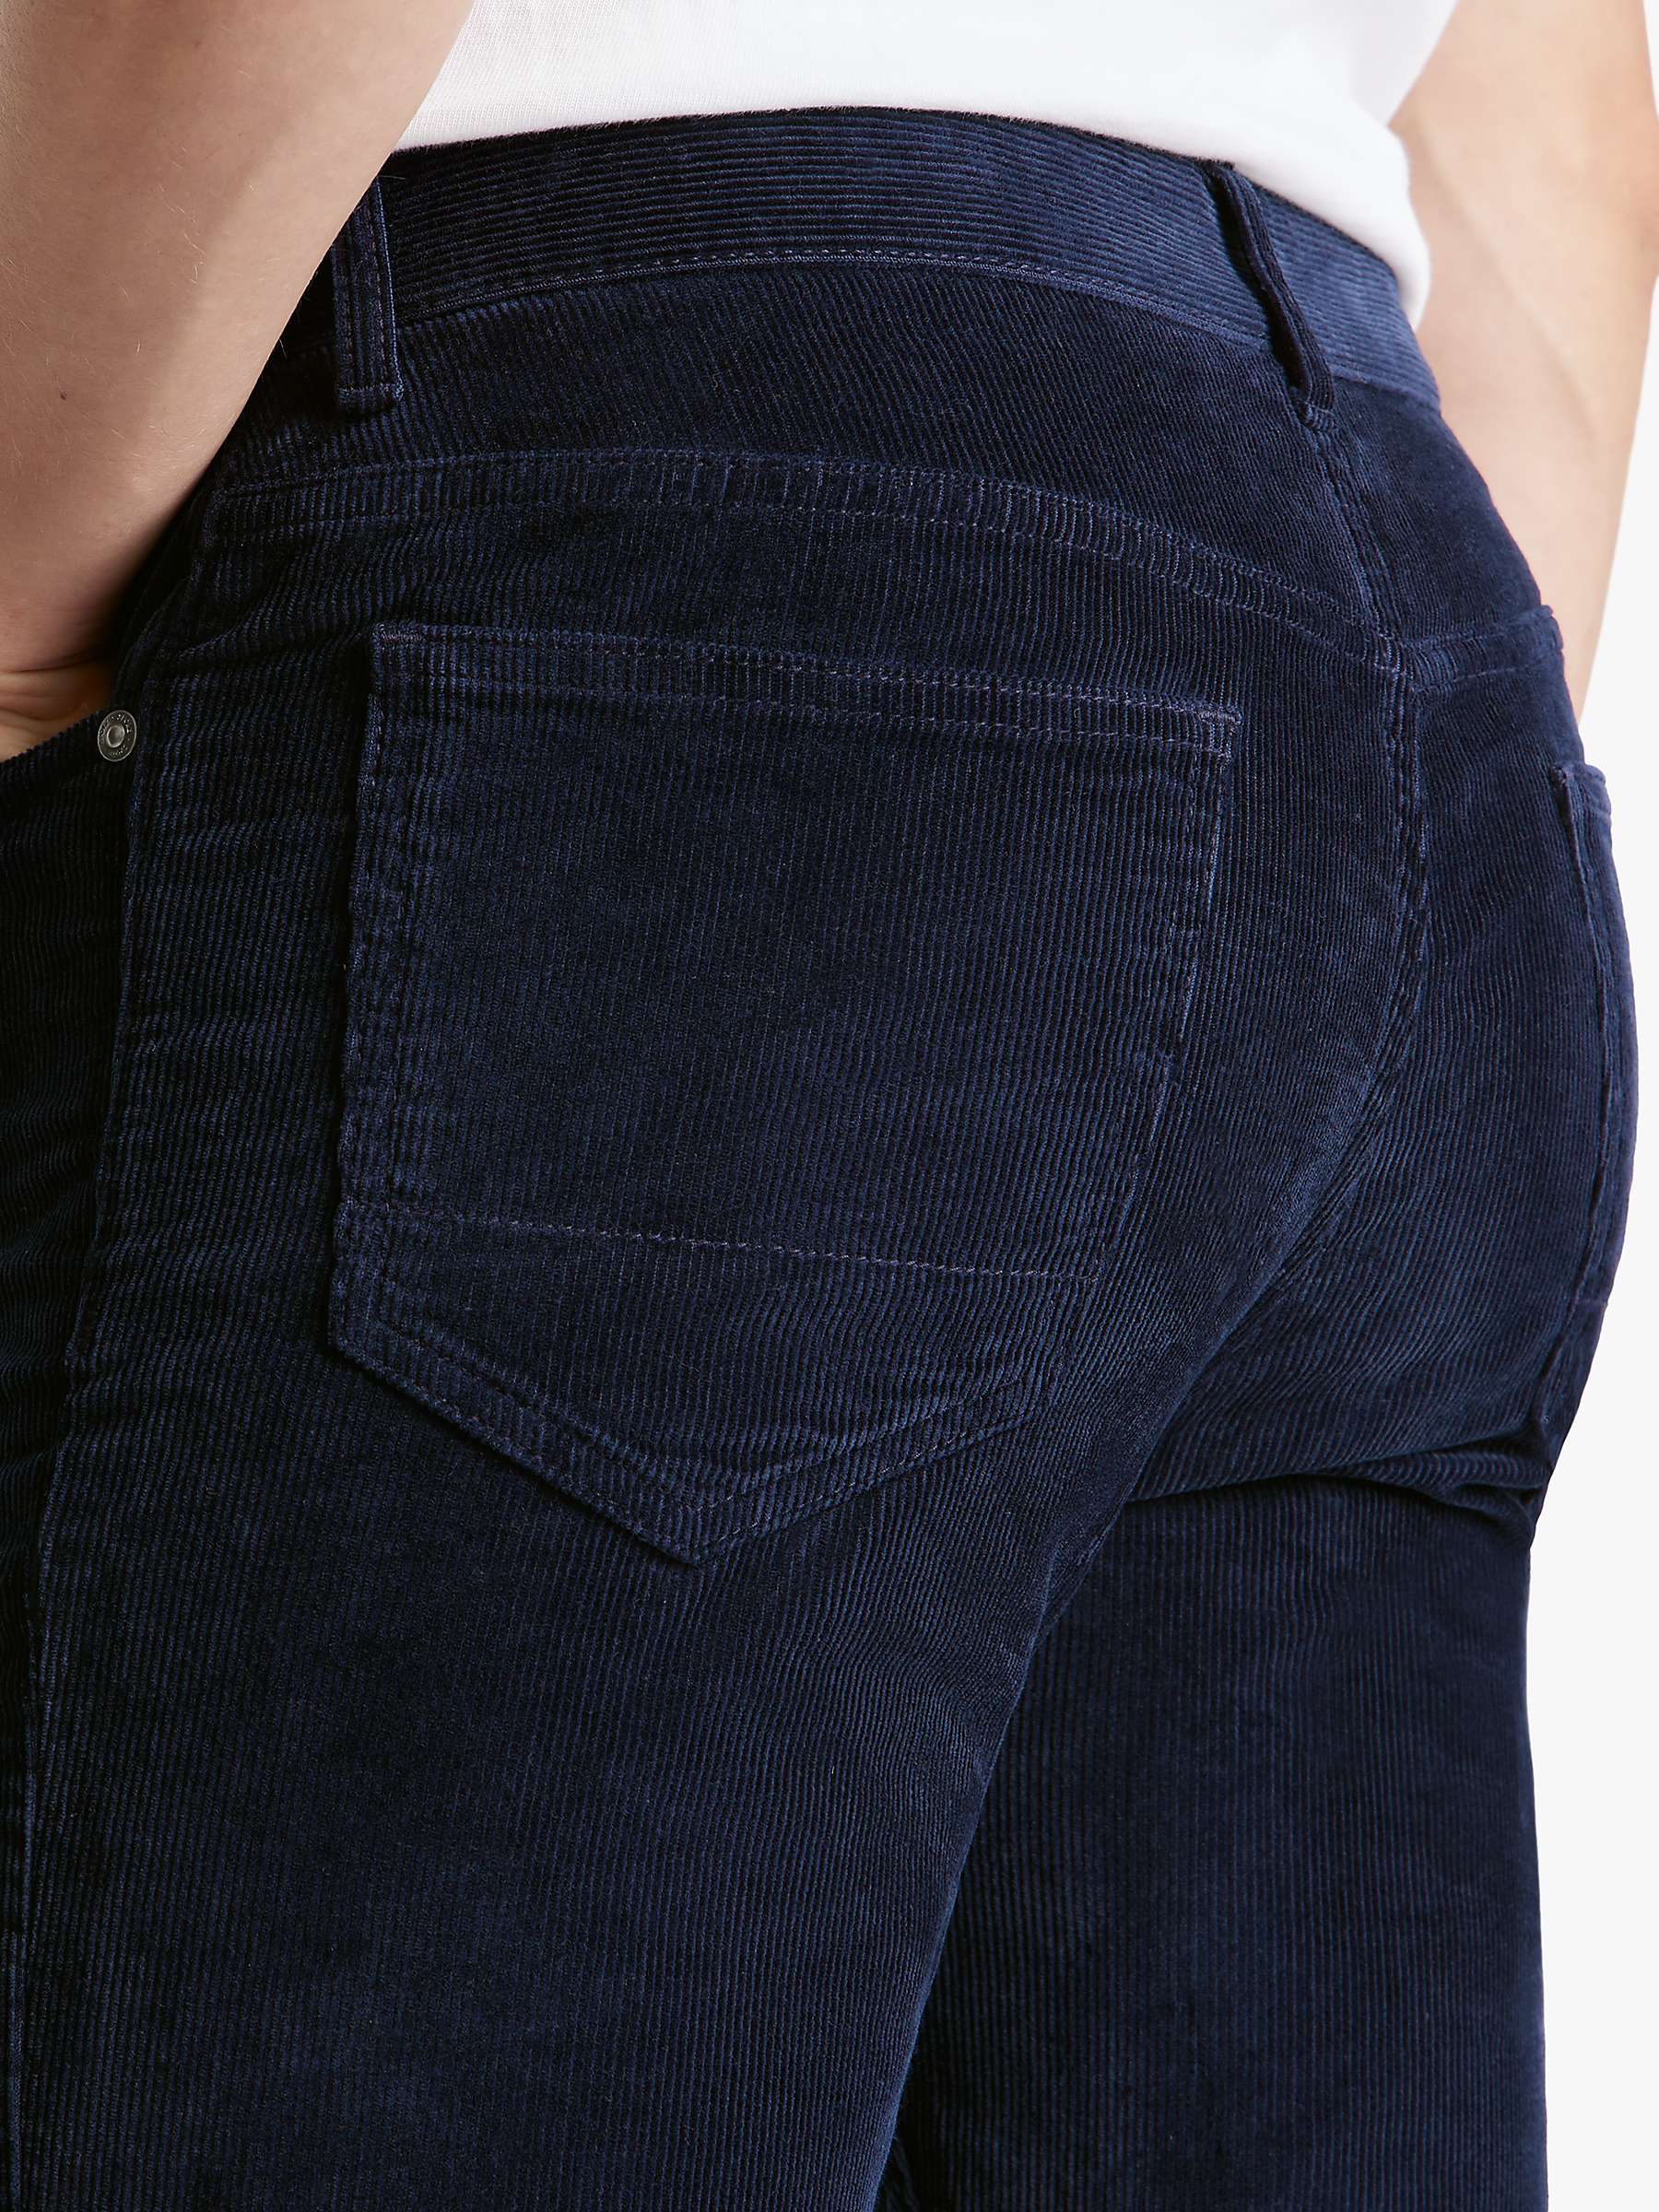 Buy SPOKE Fives Build B Regular Fit Corduroy Trousers Online at johnlewis.com